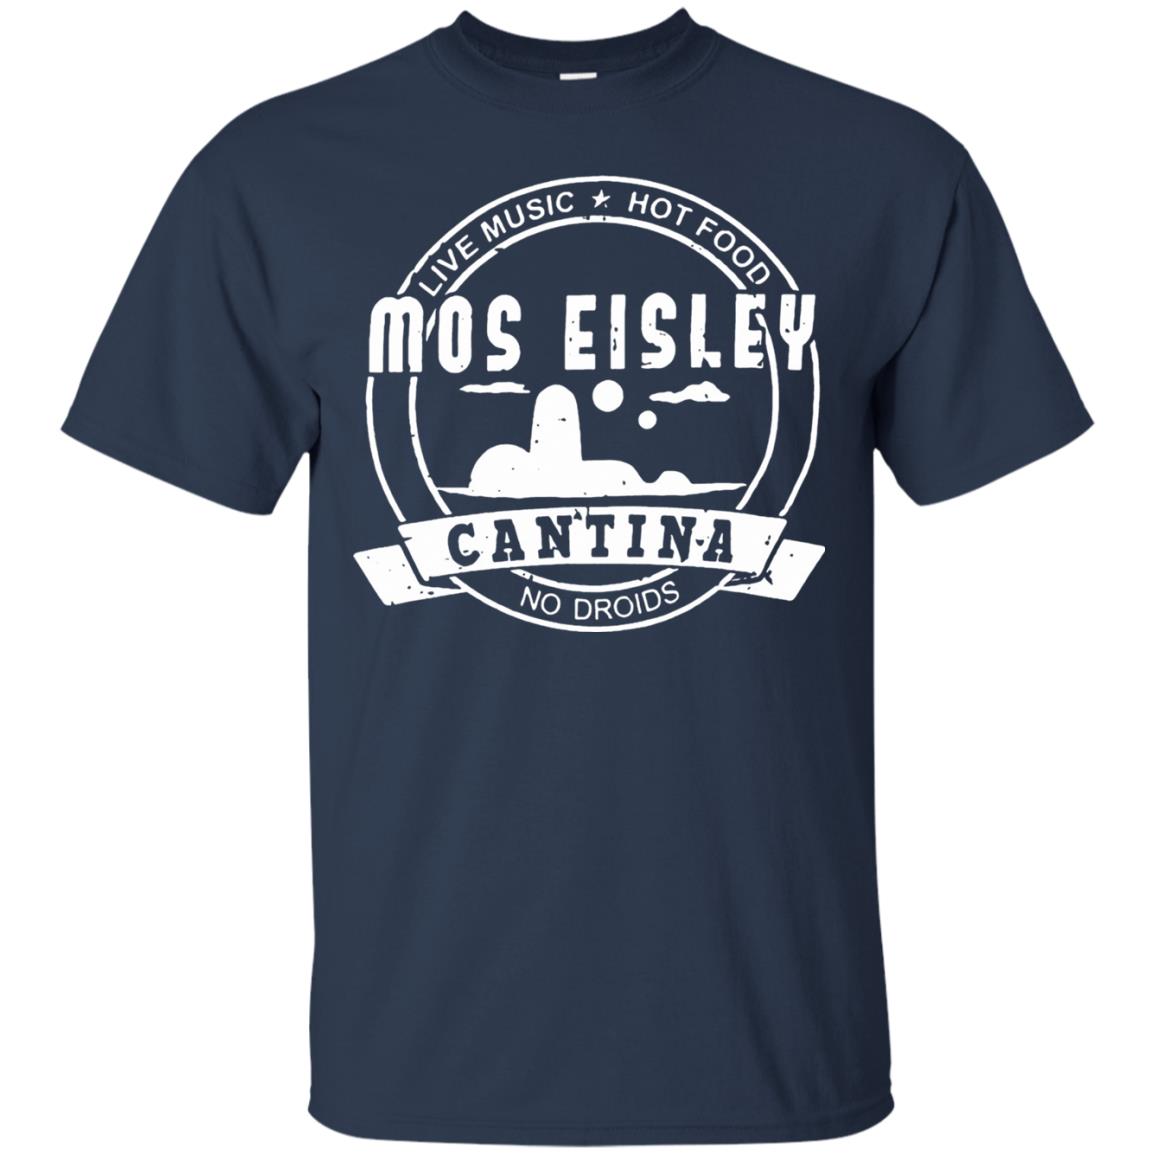 mos eisley cantina t shirt - navy blue